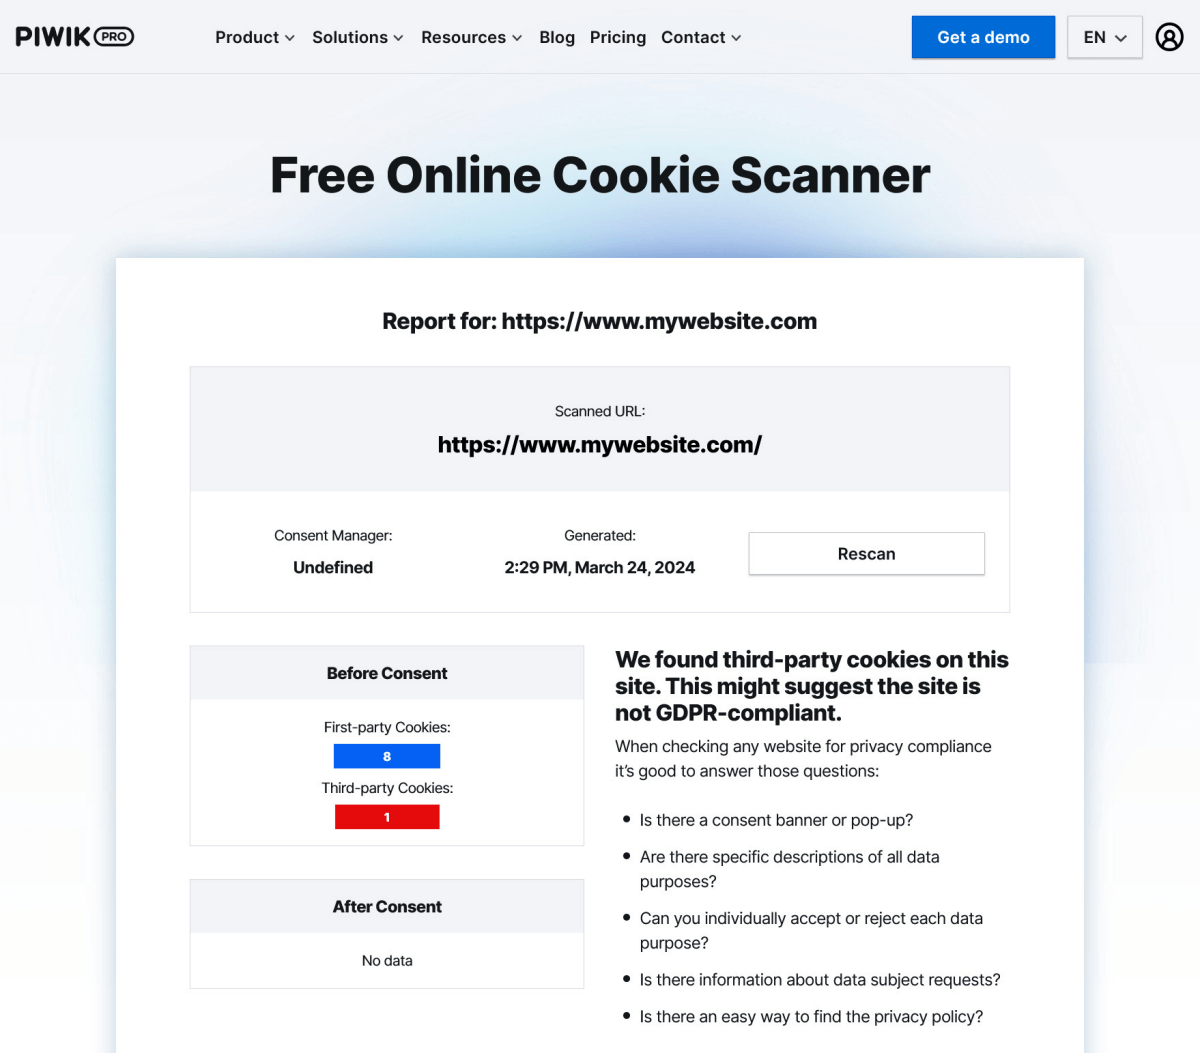 Piwik PRO - Free Online Cookie Scanner